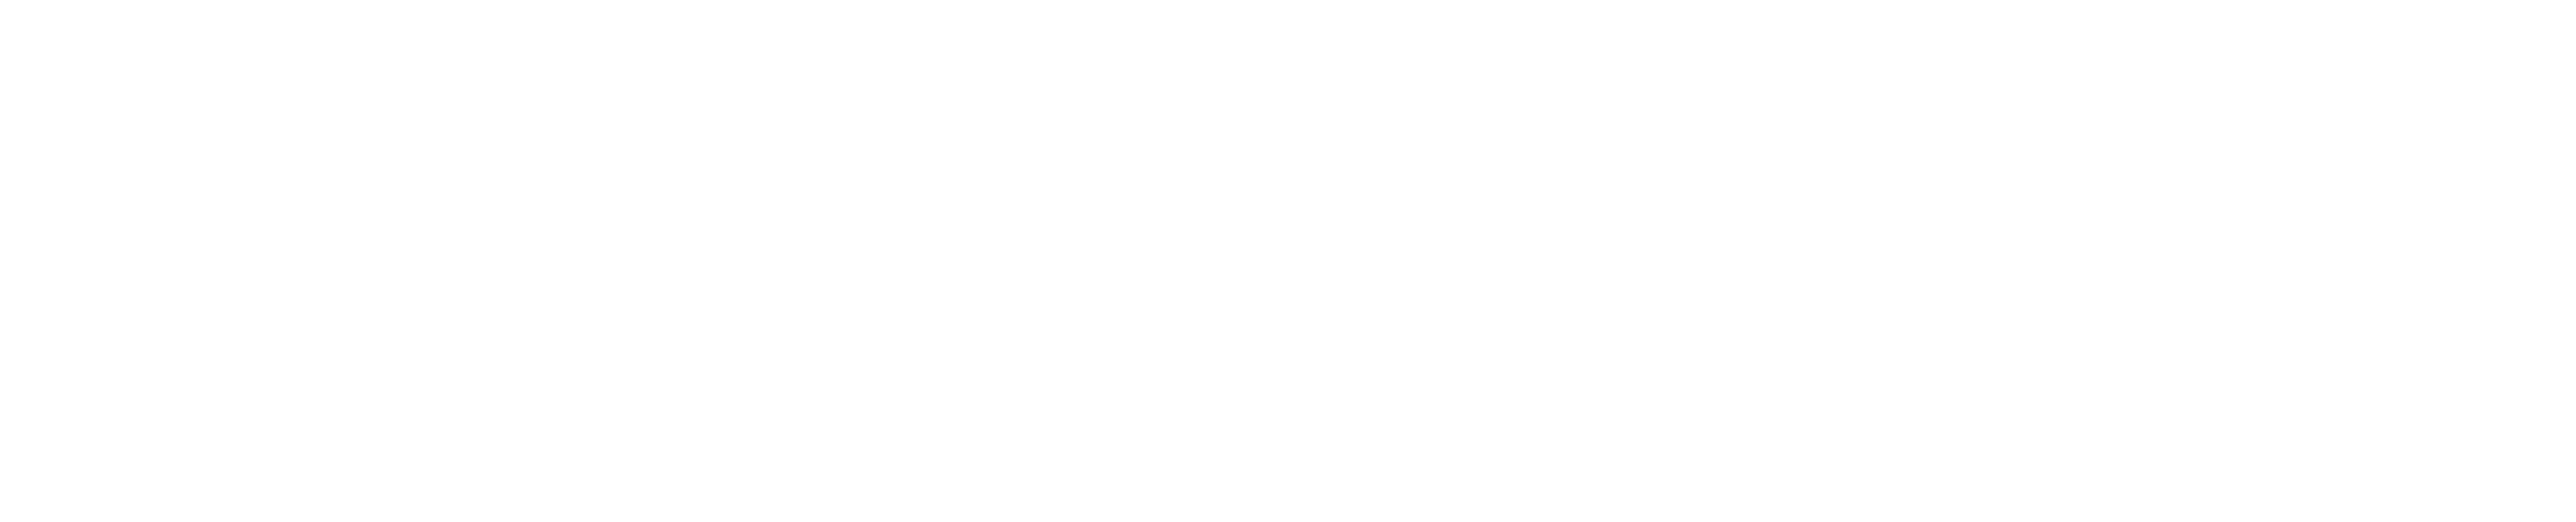 Tim Day Construction Ltd